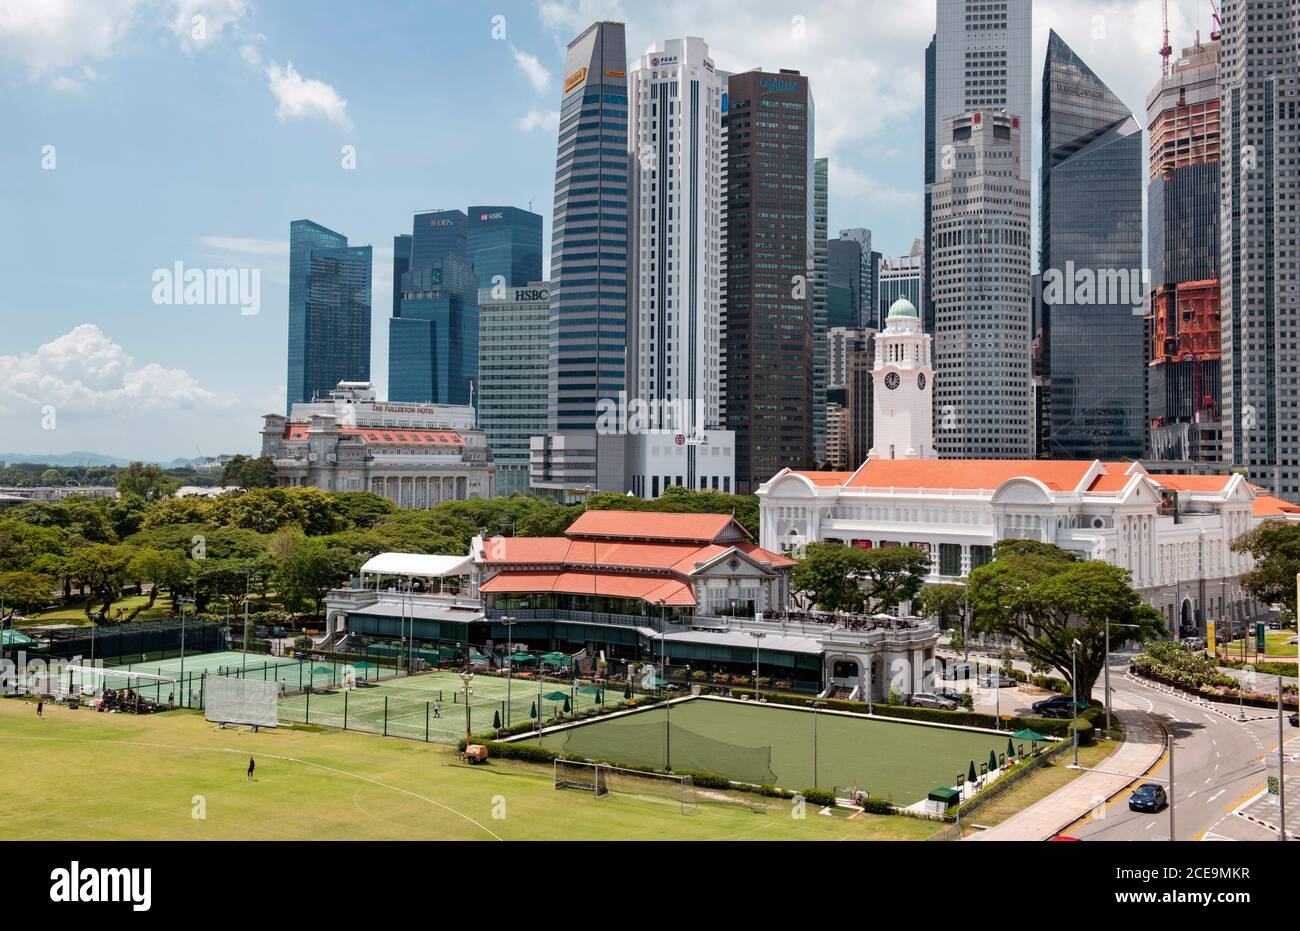 Singapur, Singapur: 07. März 2020. National Gallery Singapur Blick auf den Singapore Cricket Club Alamy Stock Image/Jayne Russell Stockfoto